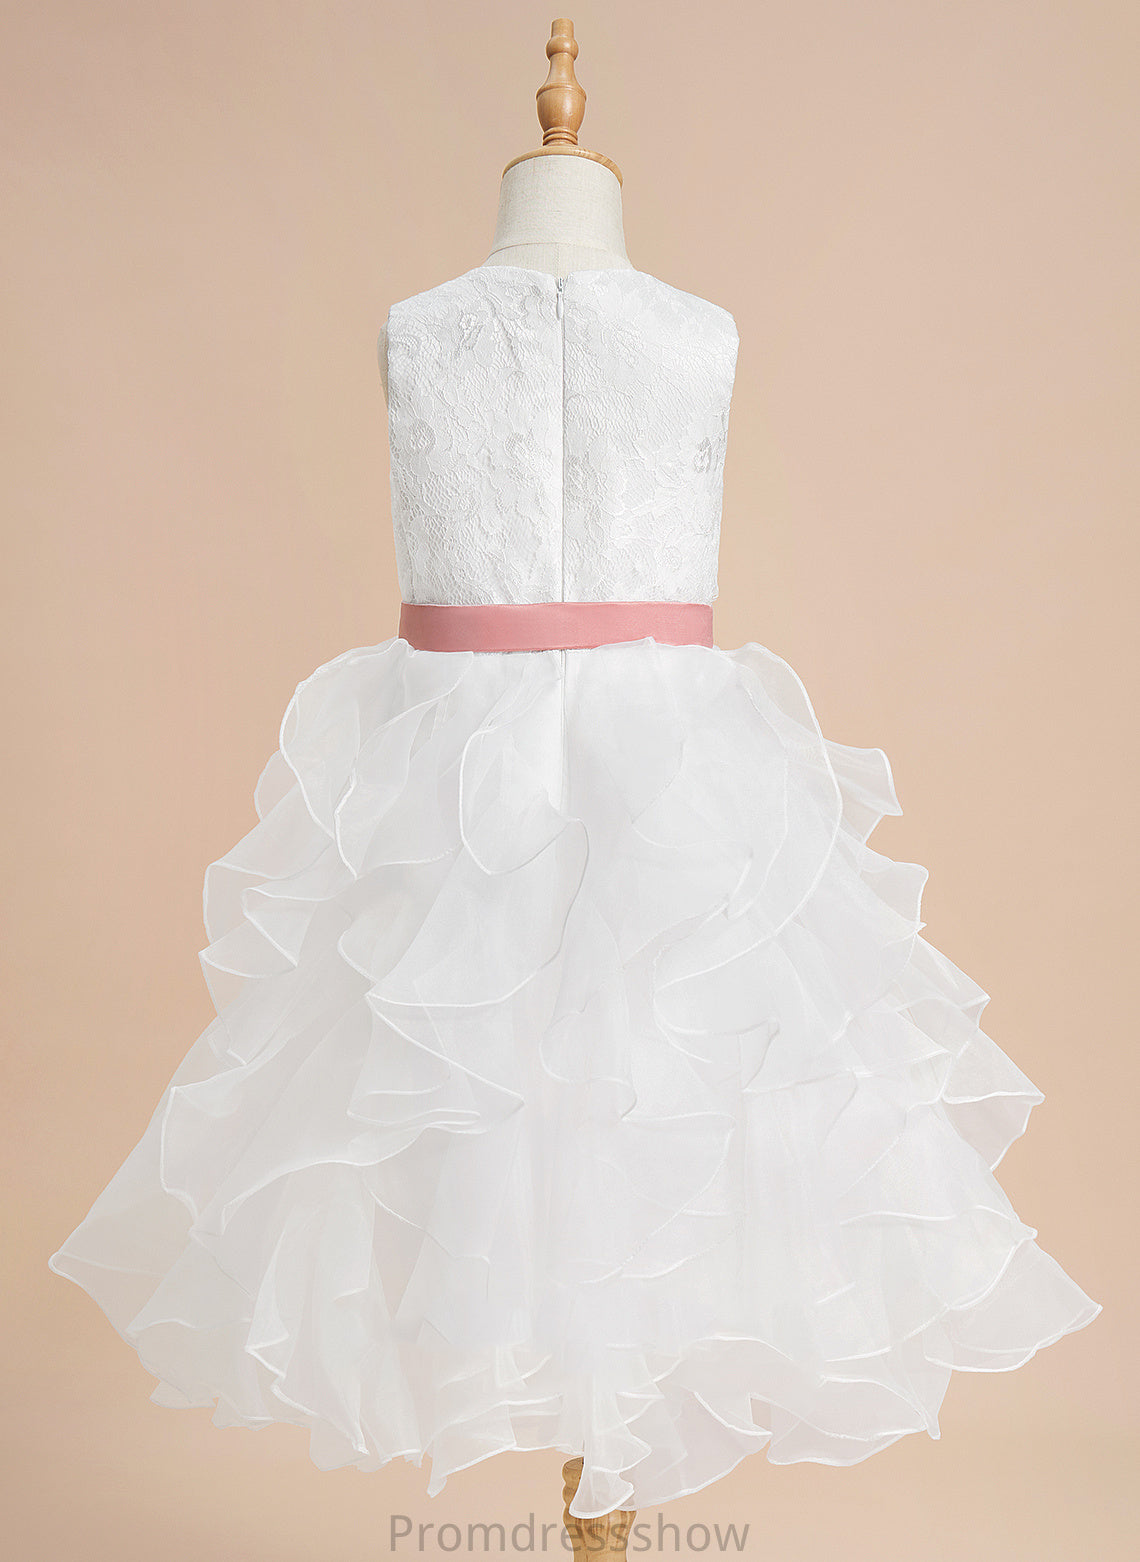 Lace/Sash Lillian Flower Ball-Gown/Princess Flower Girl Dresses Neck Scoop Sleeveless Organza Tea-length Girl Dress With -